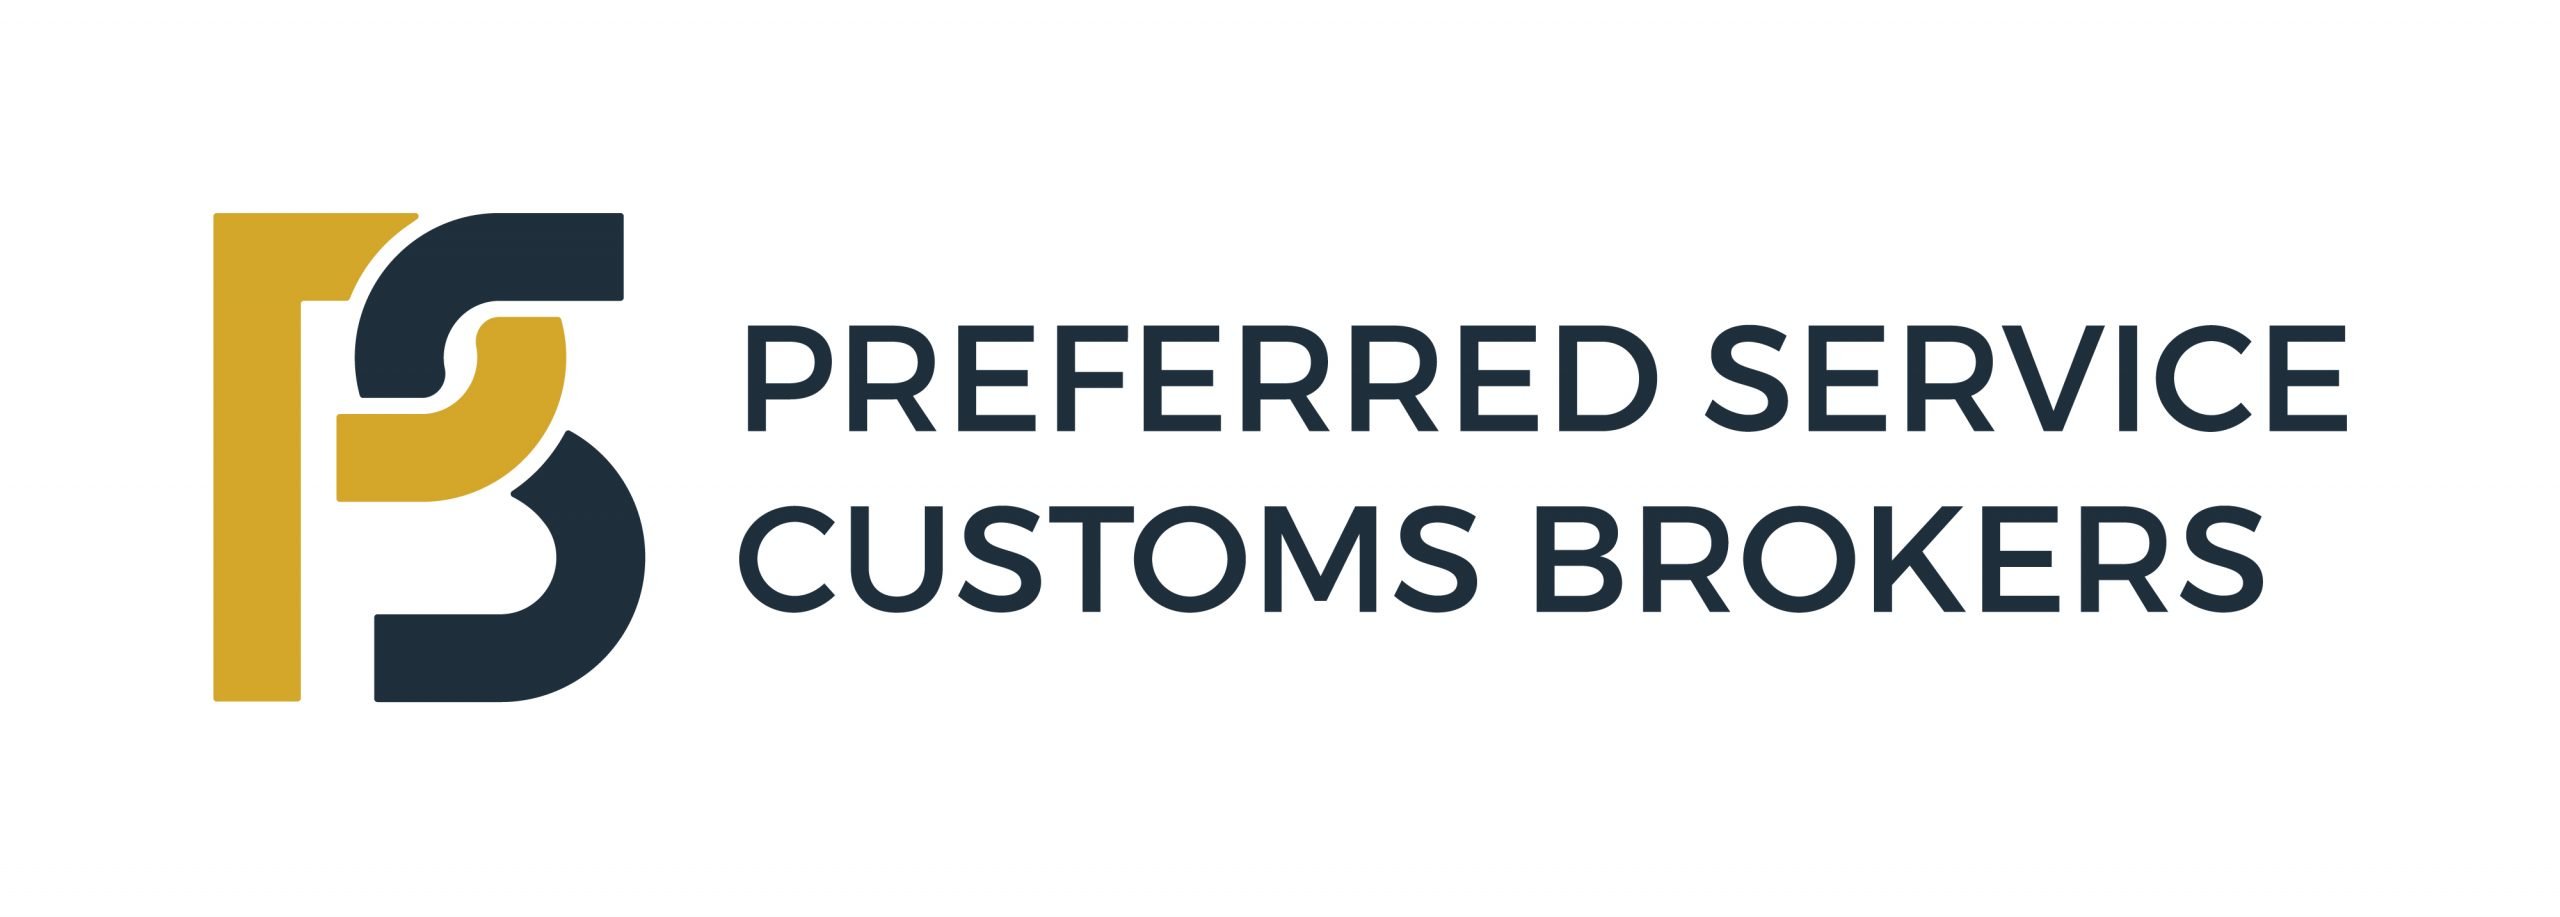 Preferred Service Customs Brokers